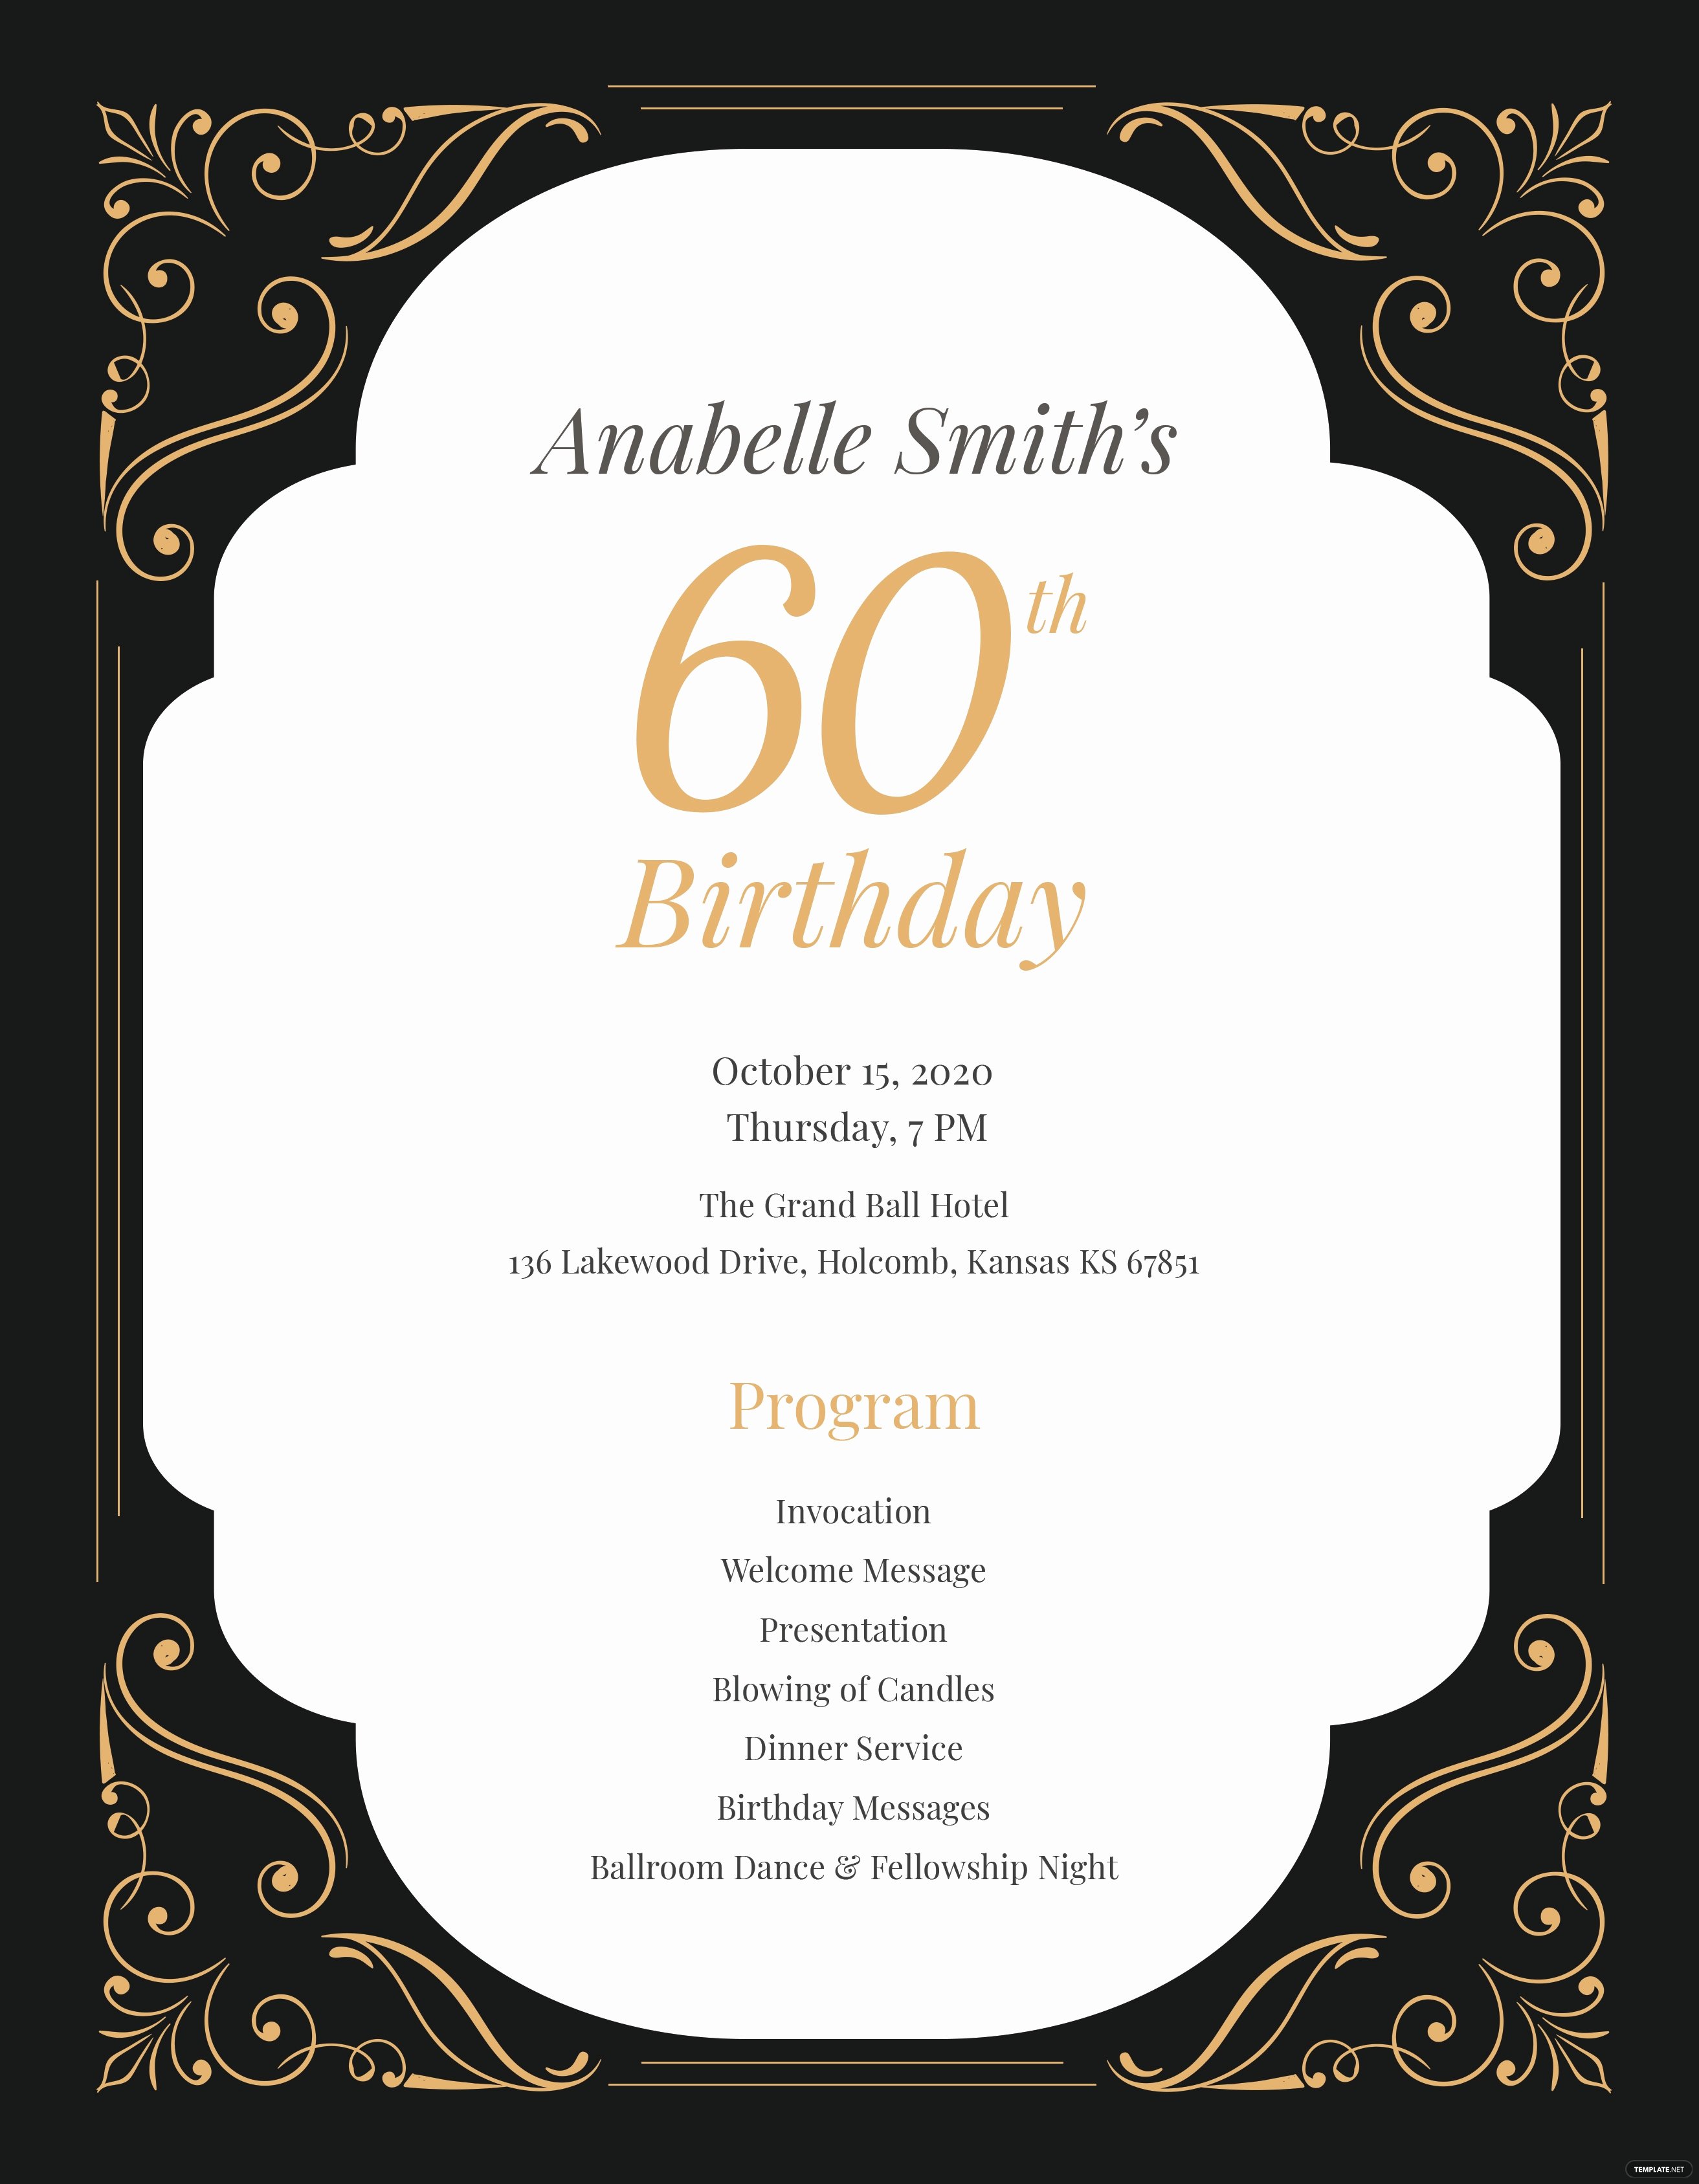 Birthday Party Programme Sample Lovely 60th Birthday Program Template In Adobe Shop